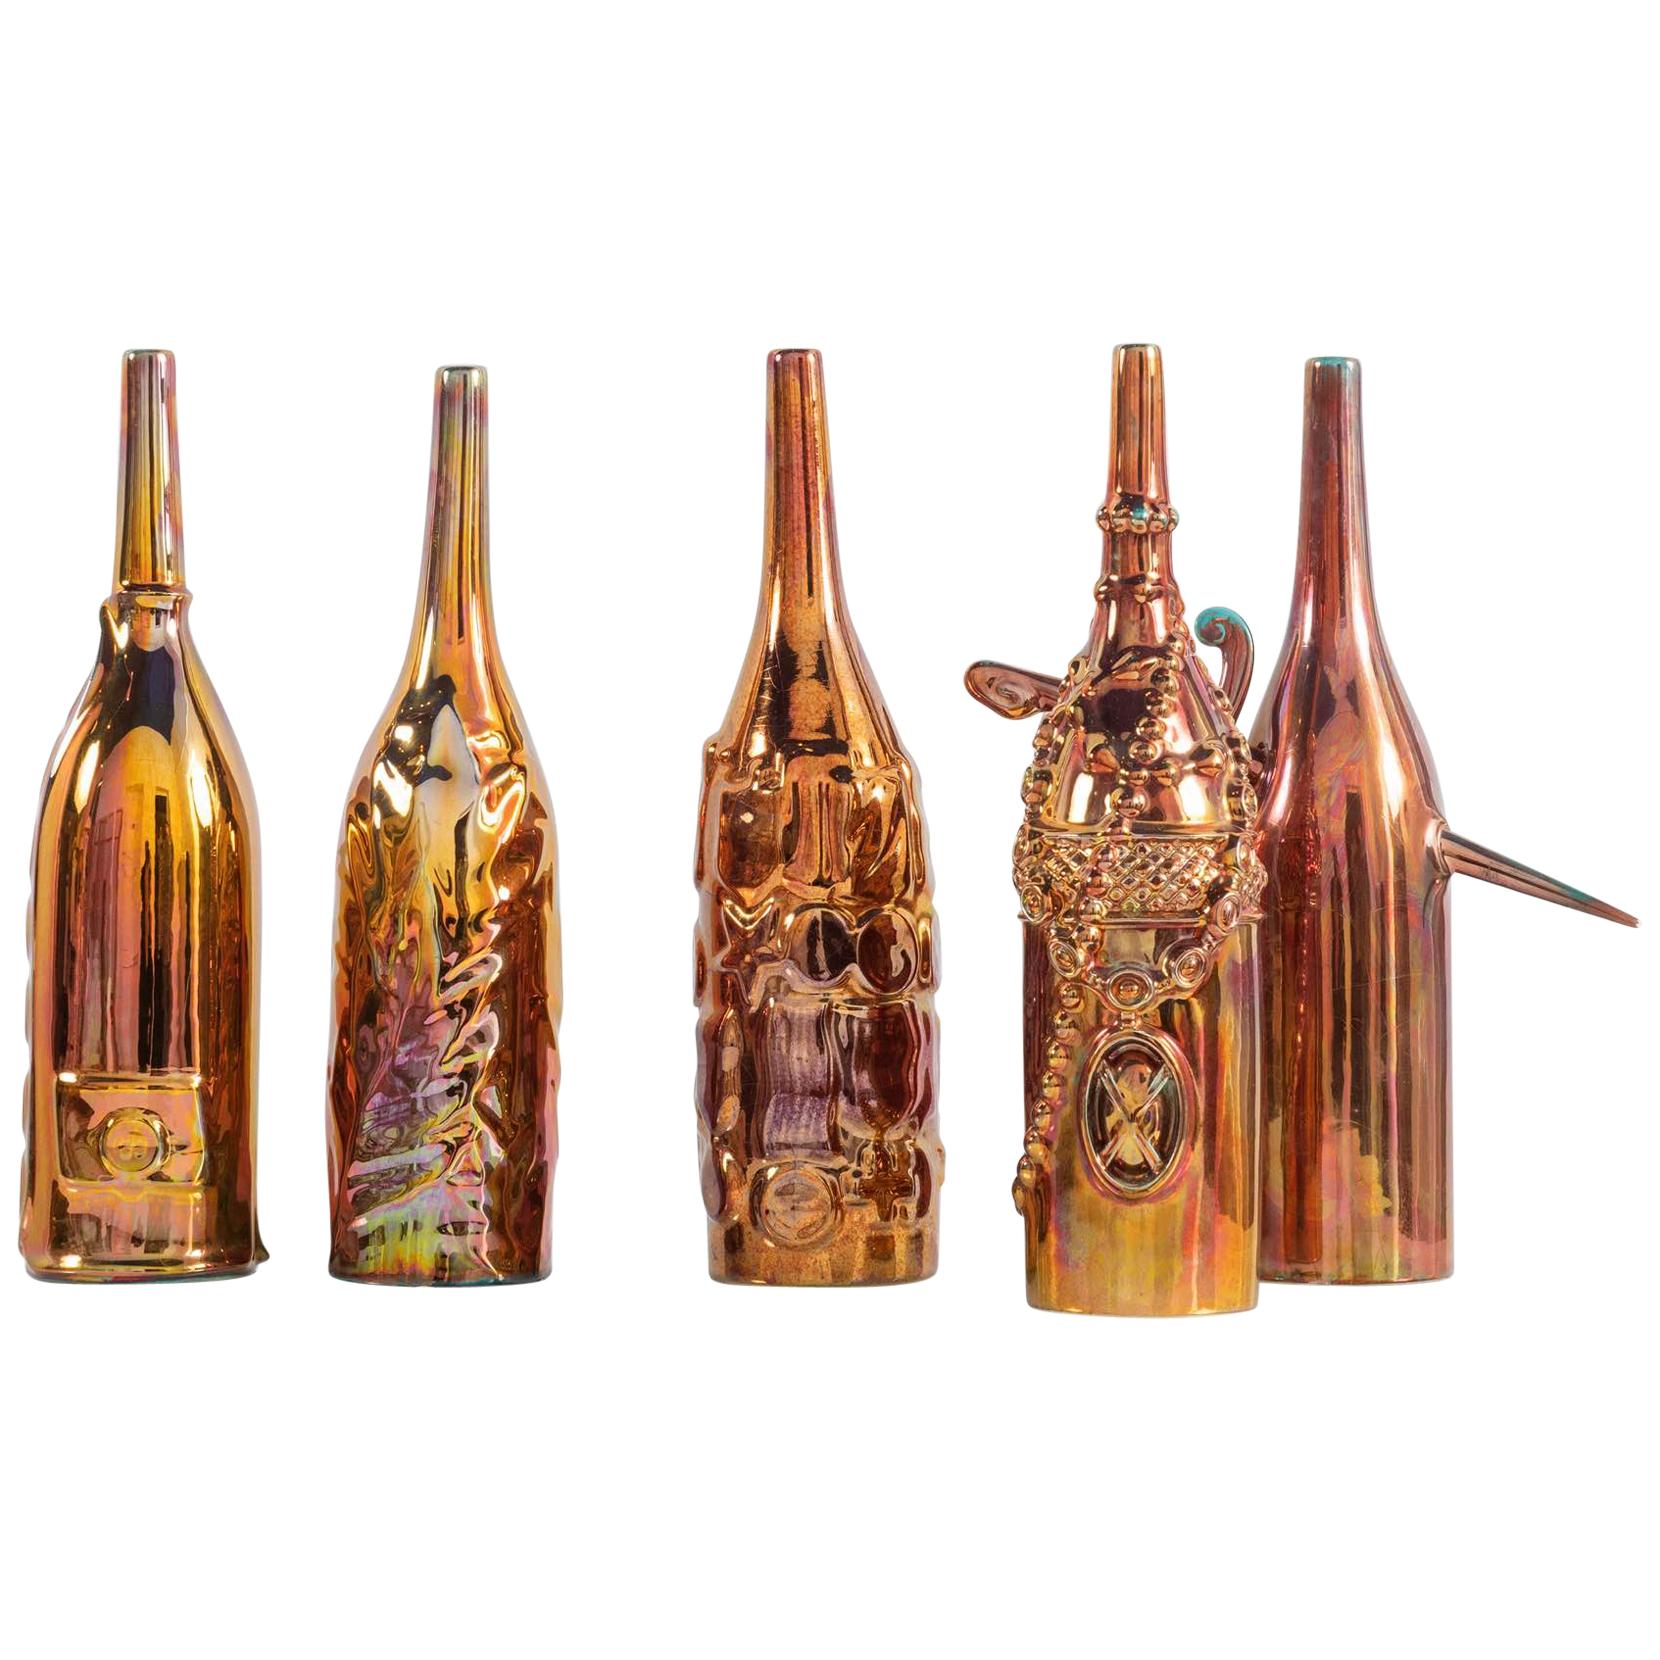 Gio Ponti Le Bottiglie Abitate Complete Series of Five Ceramic Bottles, 1950